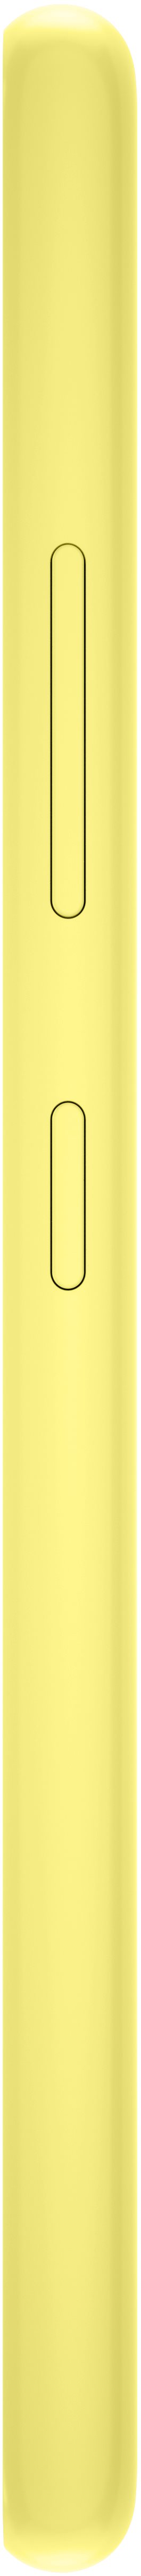 Lenovo S60 Yellow Dual SIM